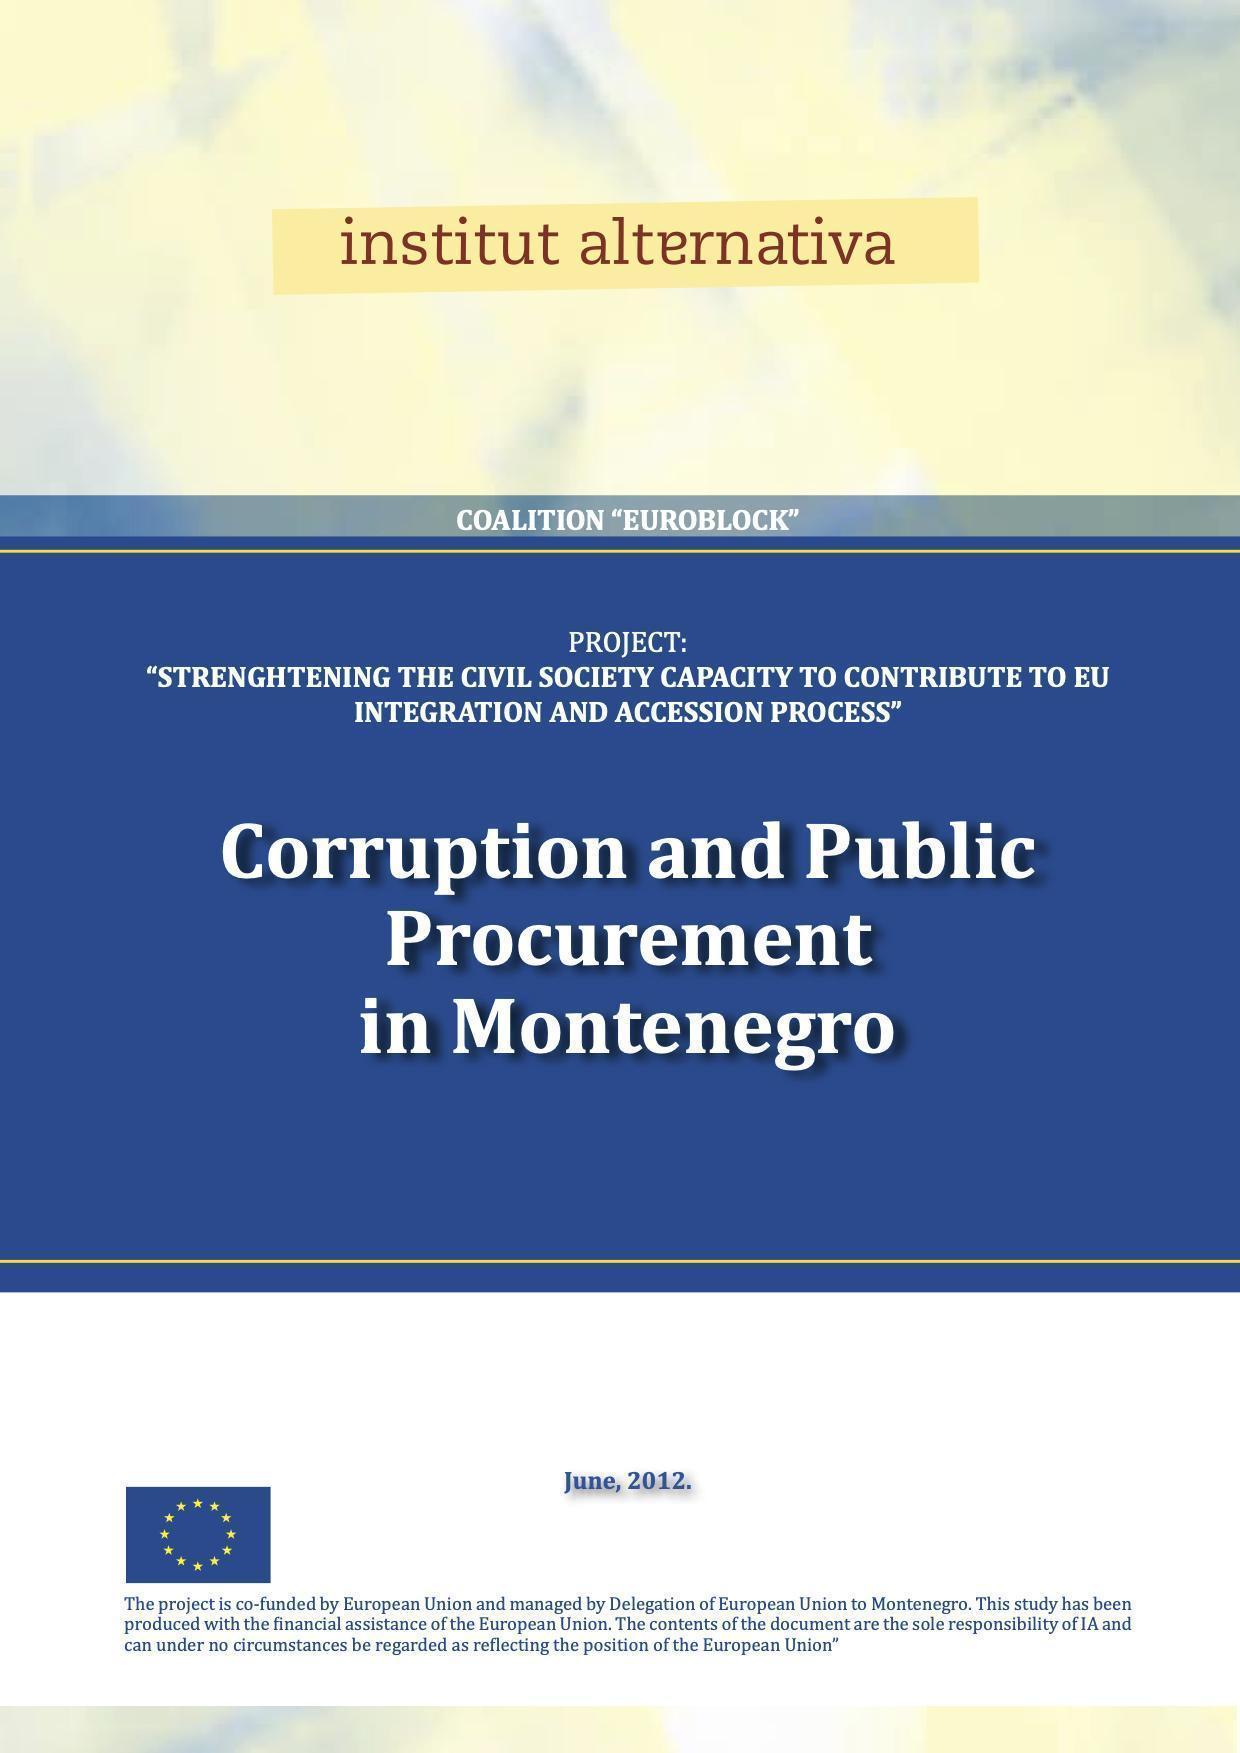 Corruption and public procurement in Montenegro